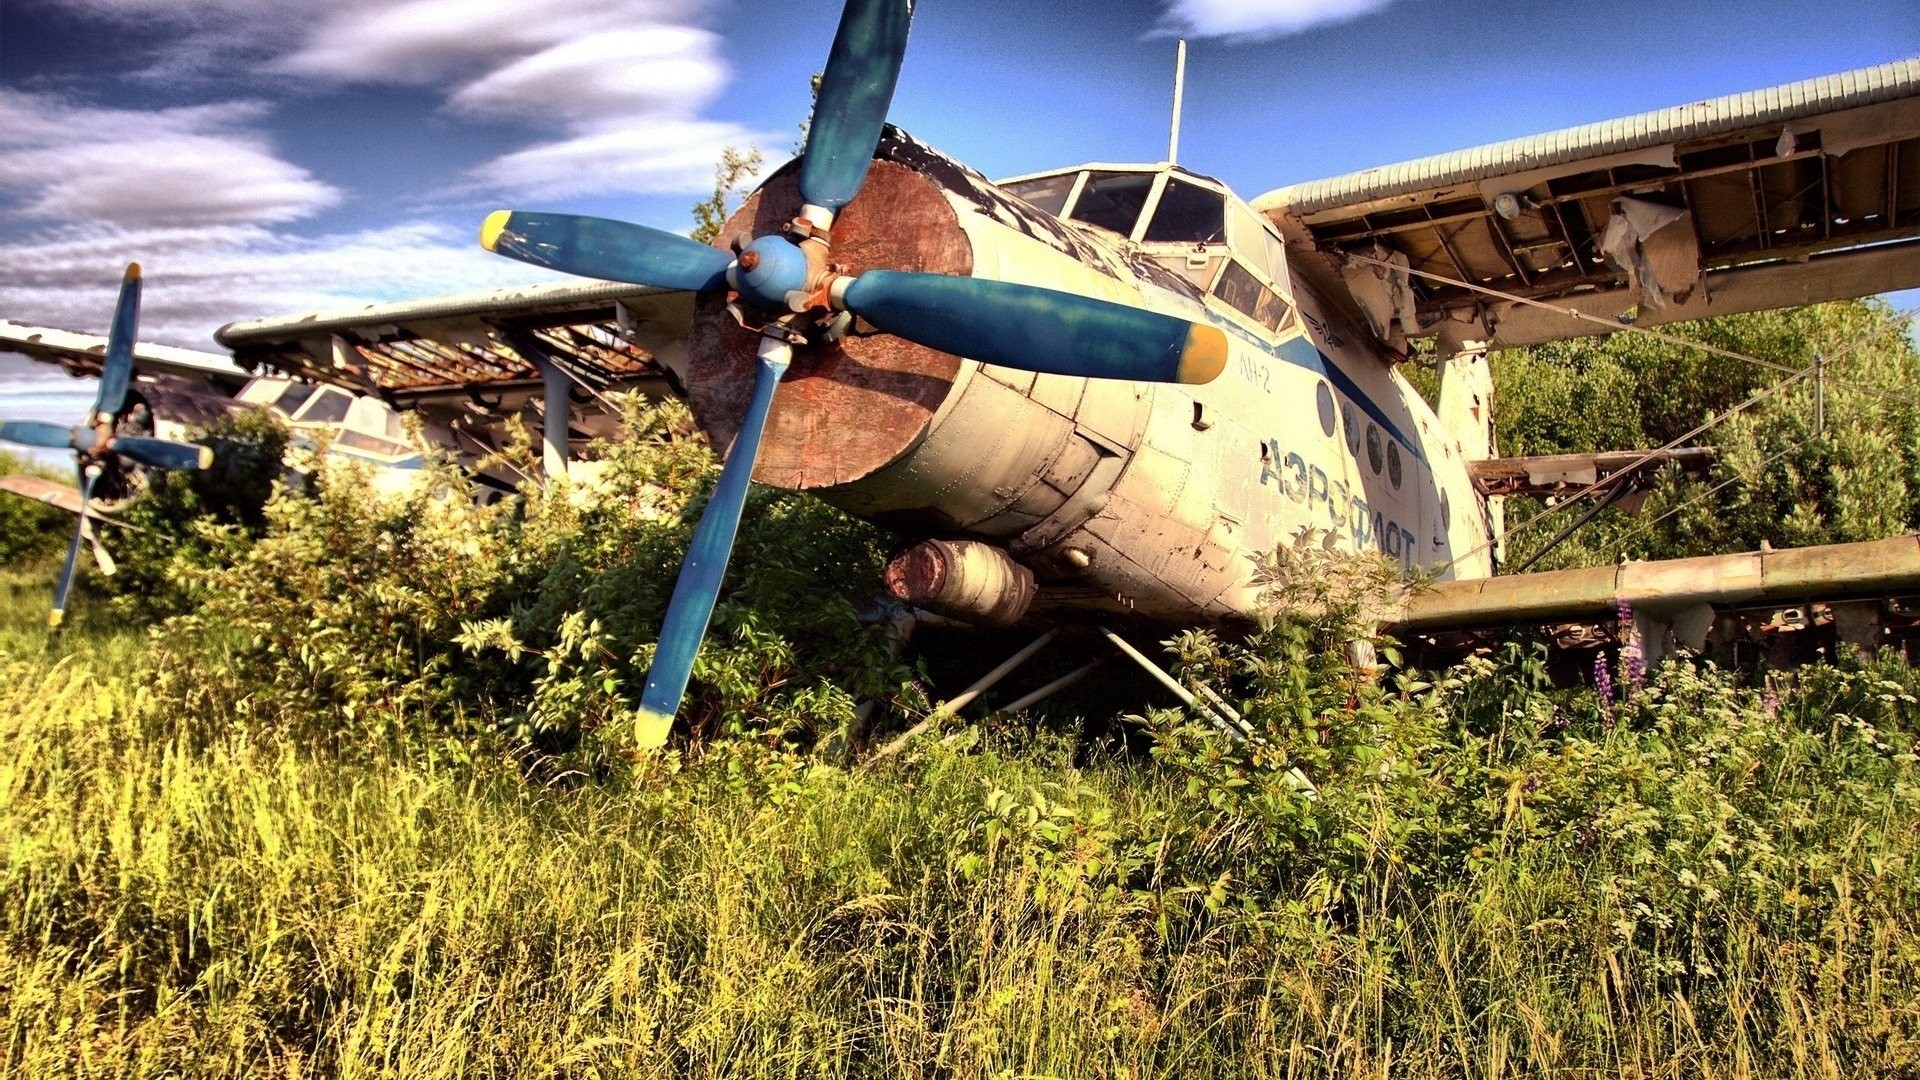 General 1920x1080 wreck airplane vehicle aircraft propeller plants grass Antonov An-2 Russian/Soviet aircraft